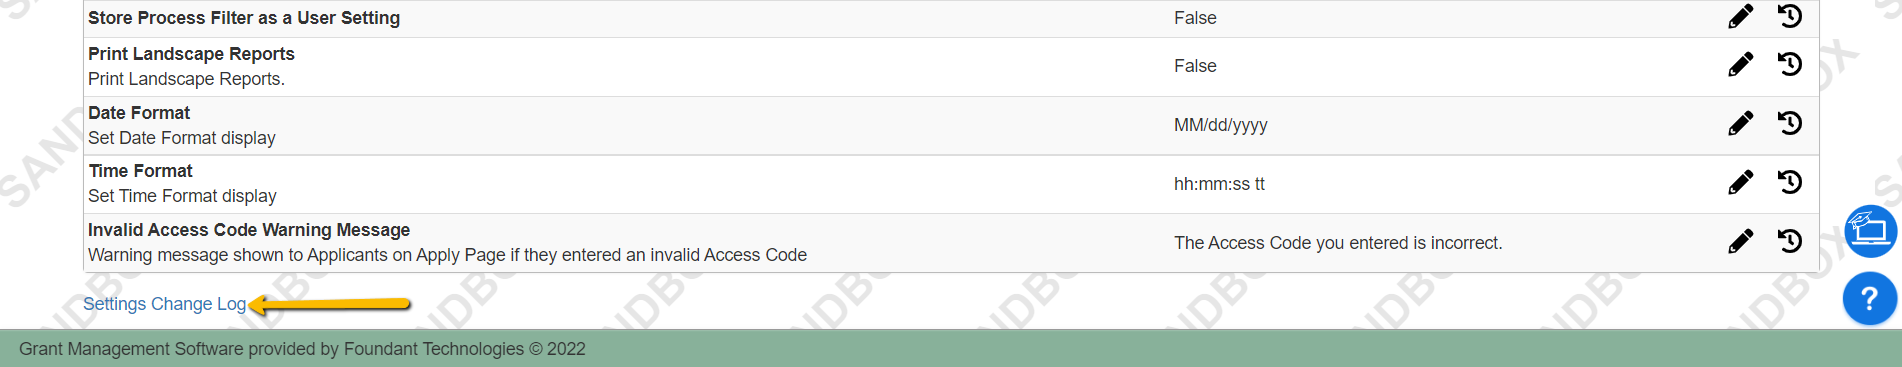 site settings change log